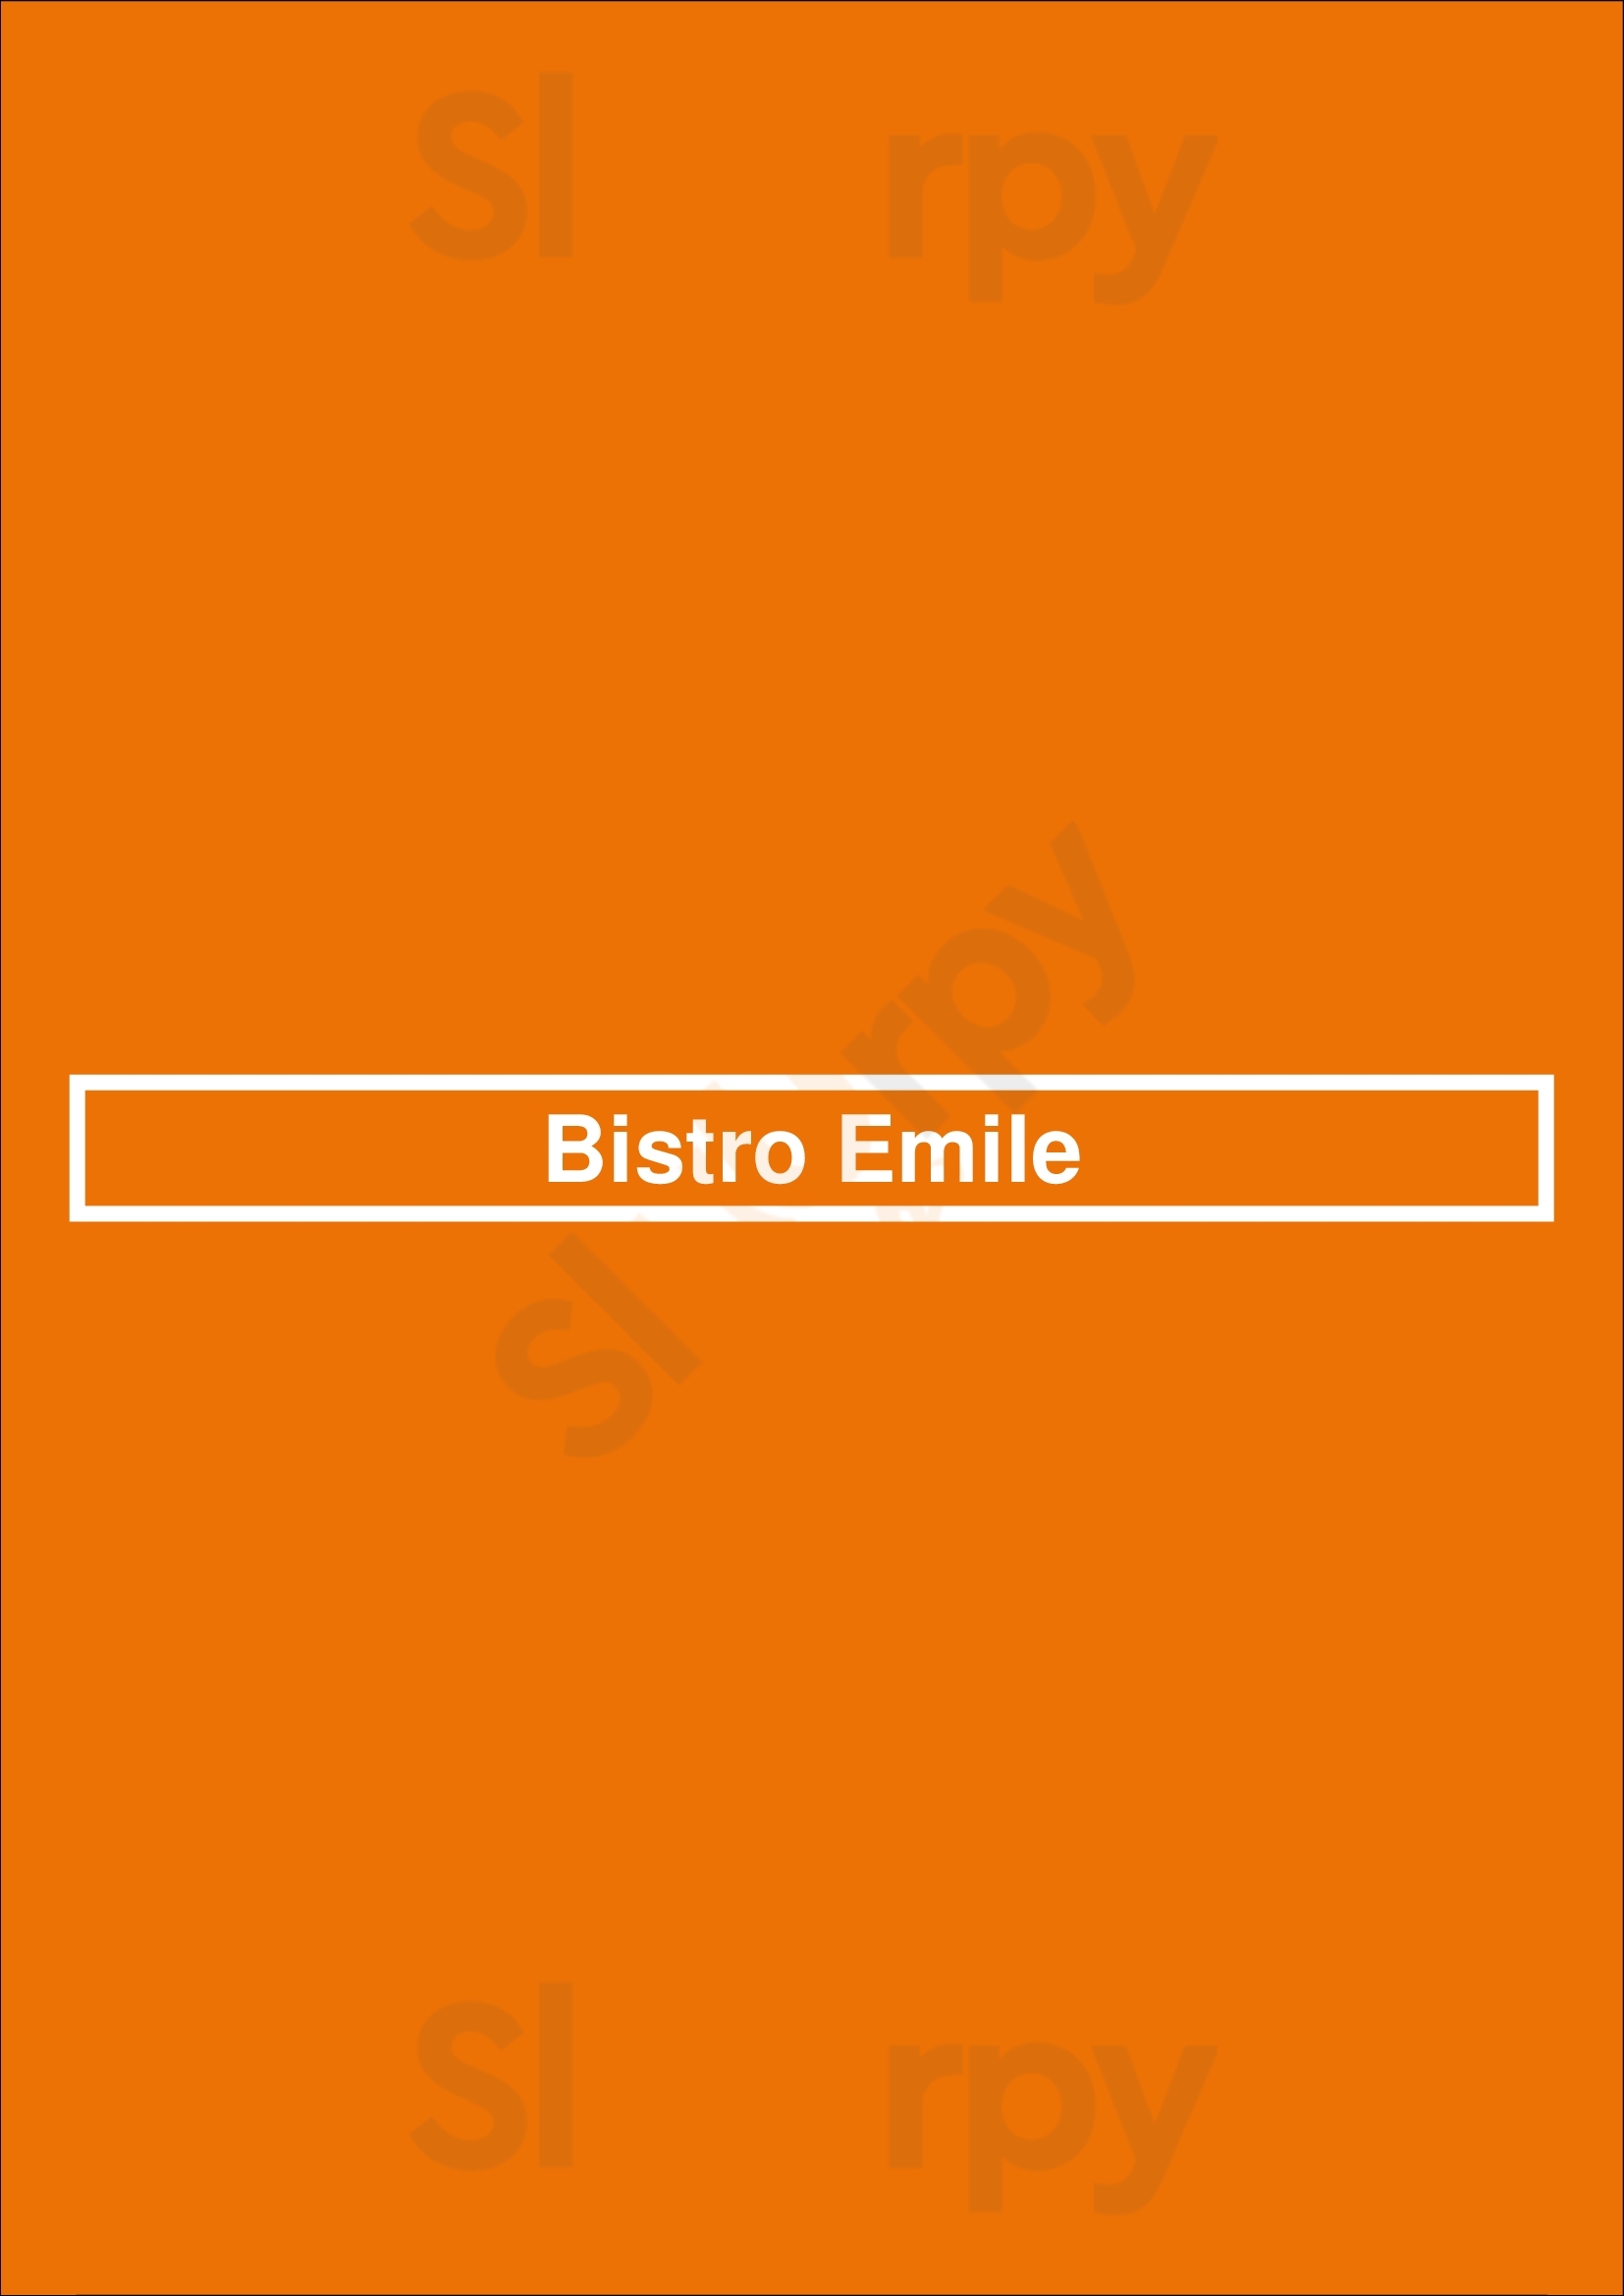 Bistro Emile Bruxelles Menu - 1